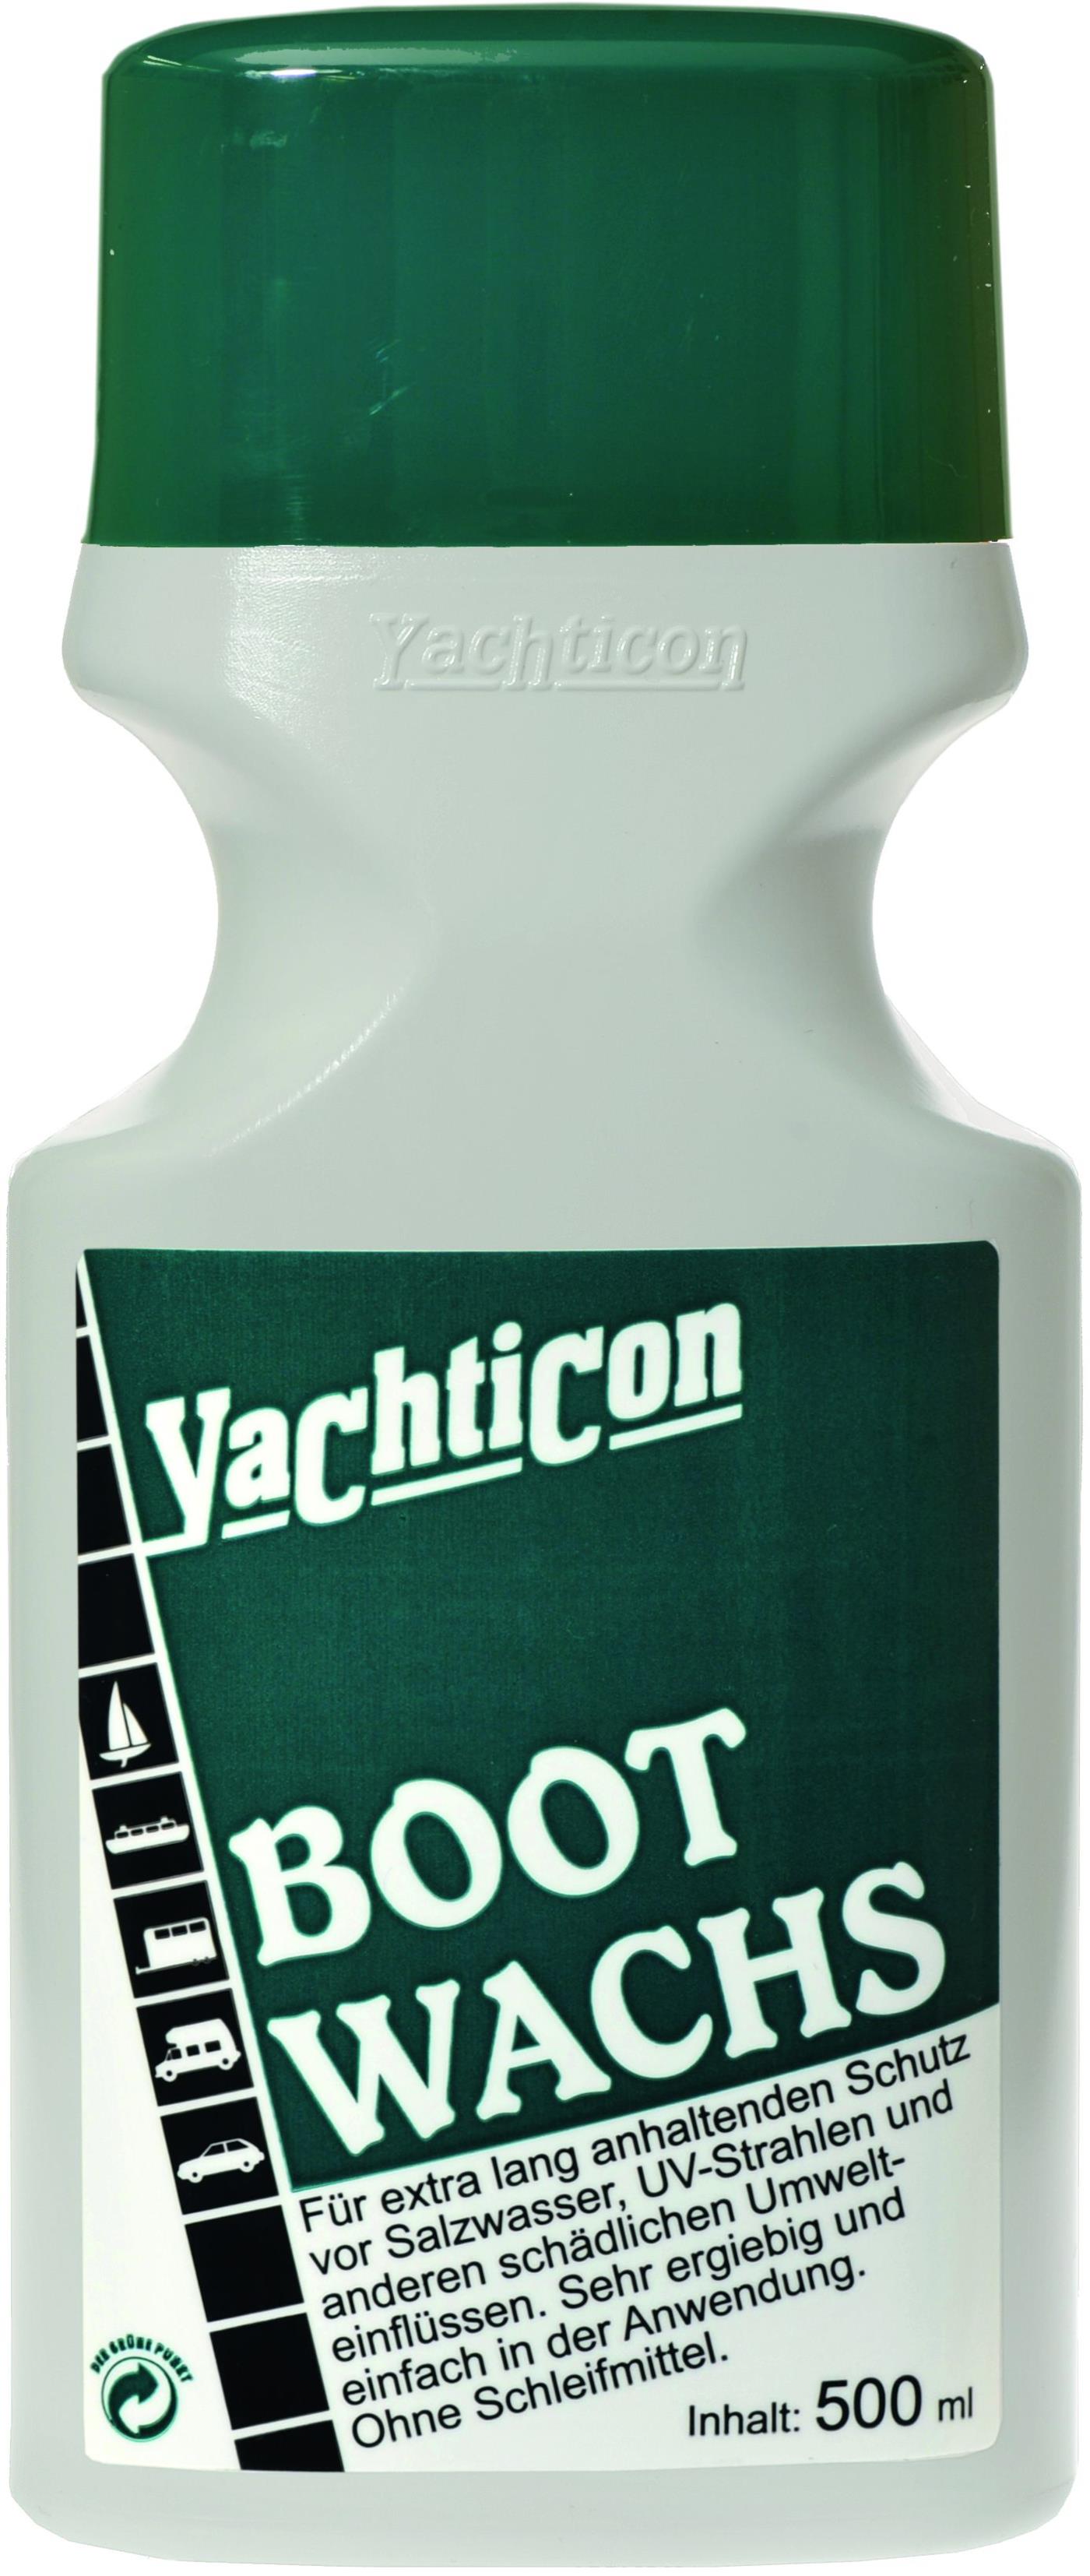 Yachticon Boot Wachs 500 ml